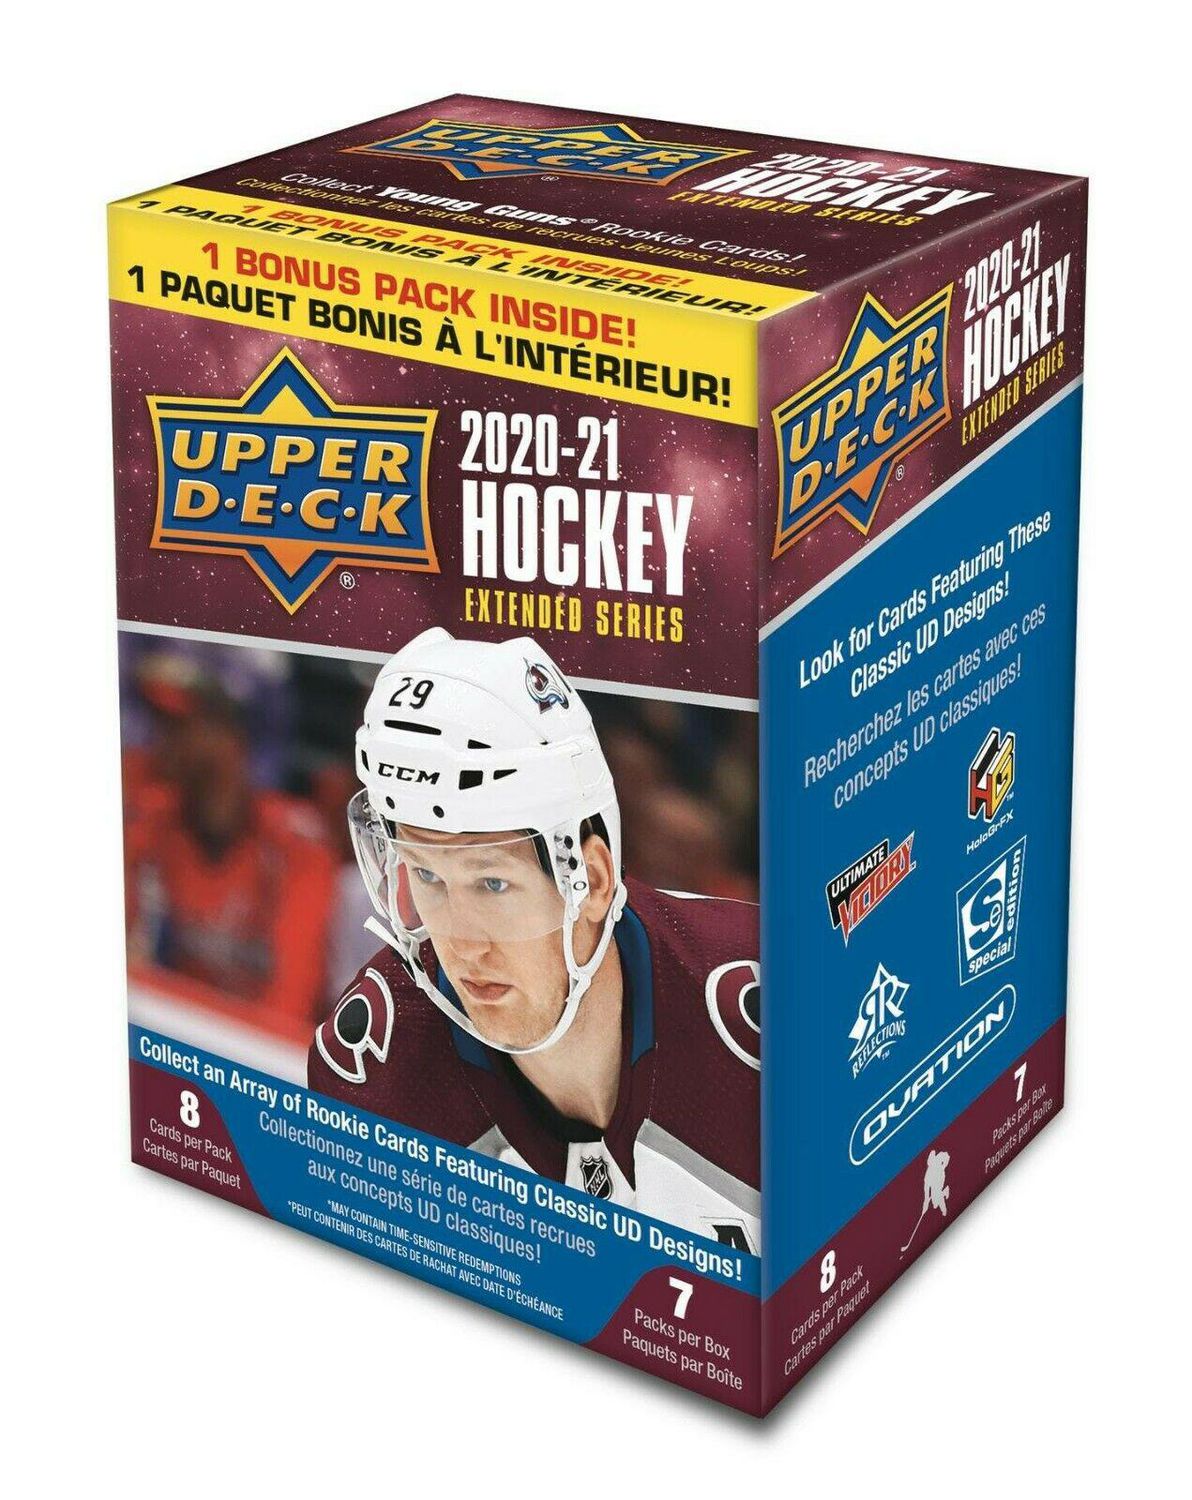 202021 Upper Deck Extended Series NHL Hockey Trading Cards Blaster Box